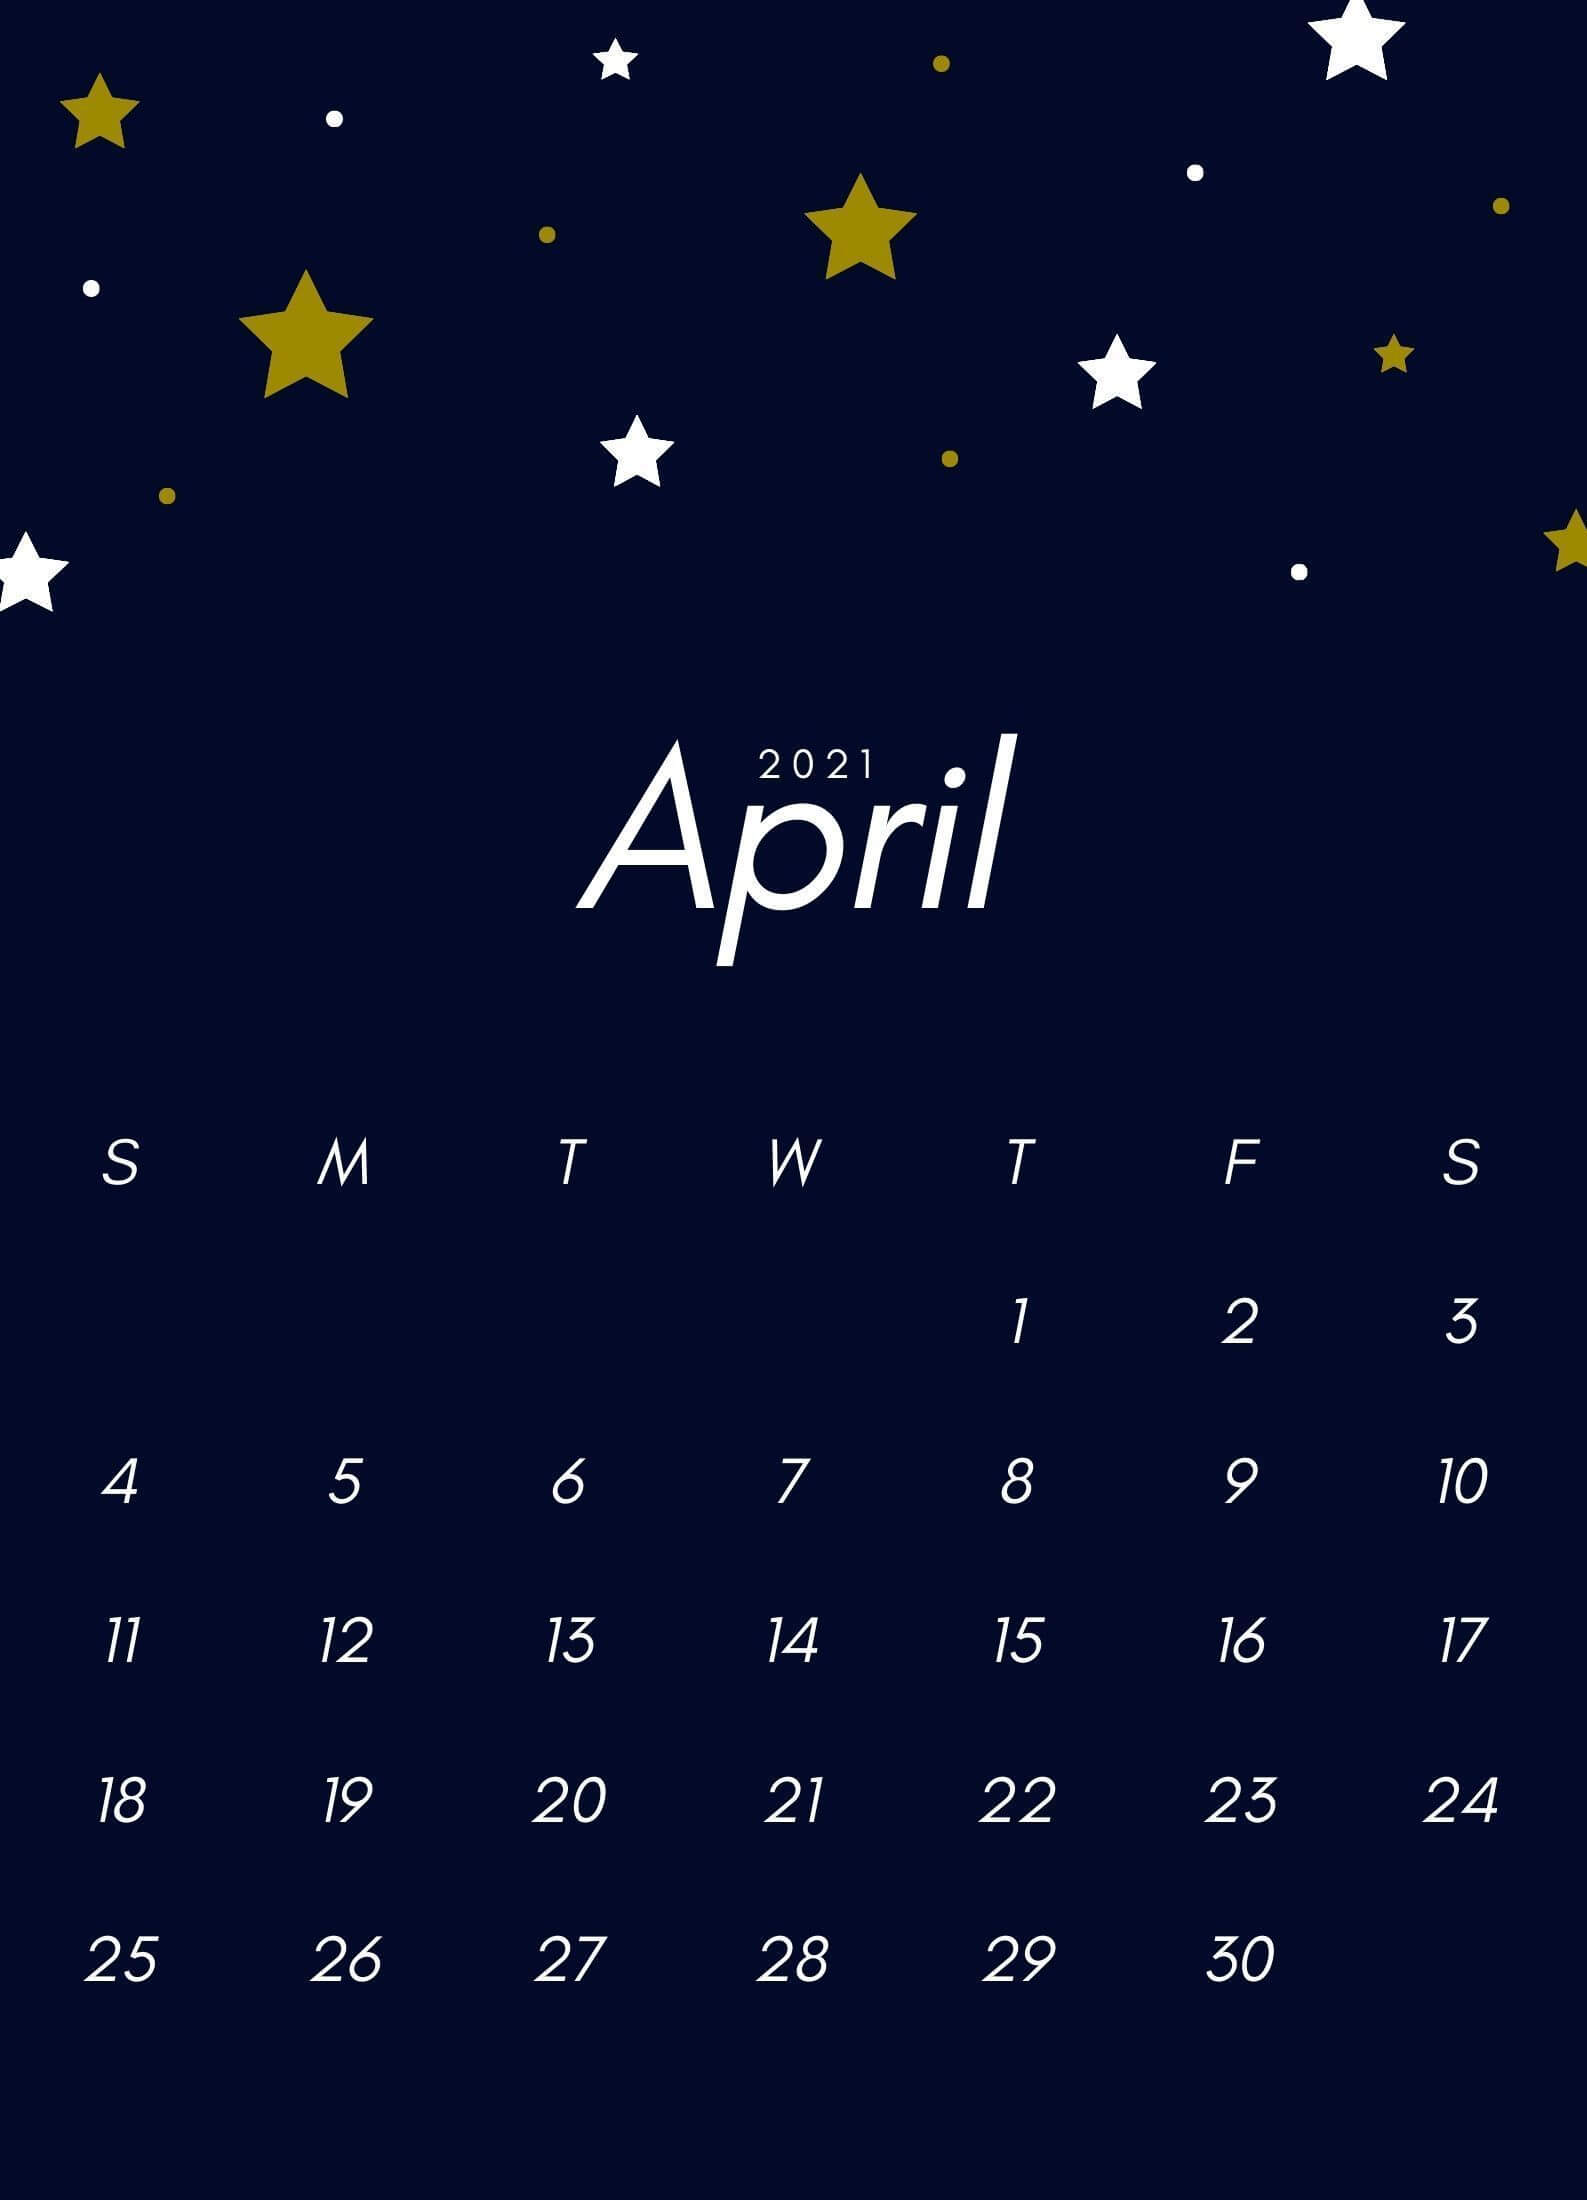 April 2021 iPhone Calendar Wallpaper